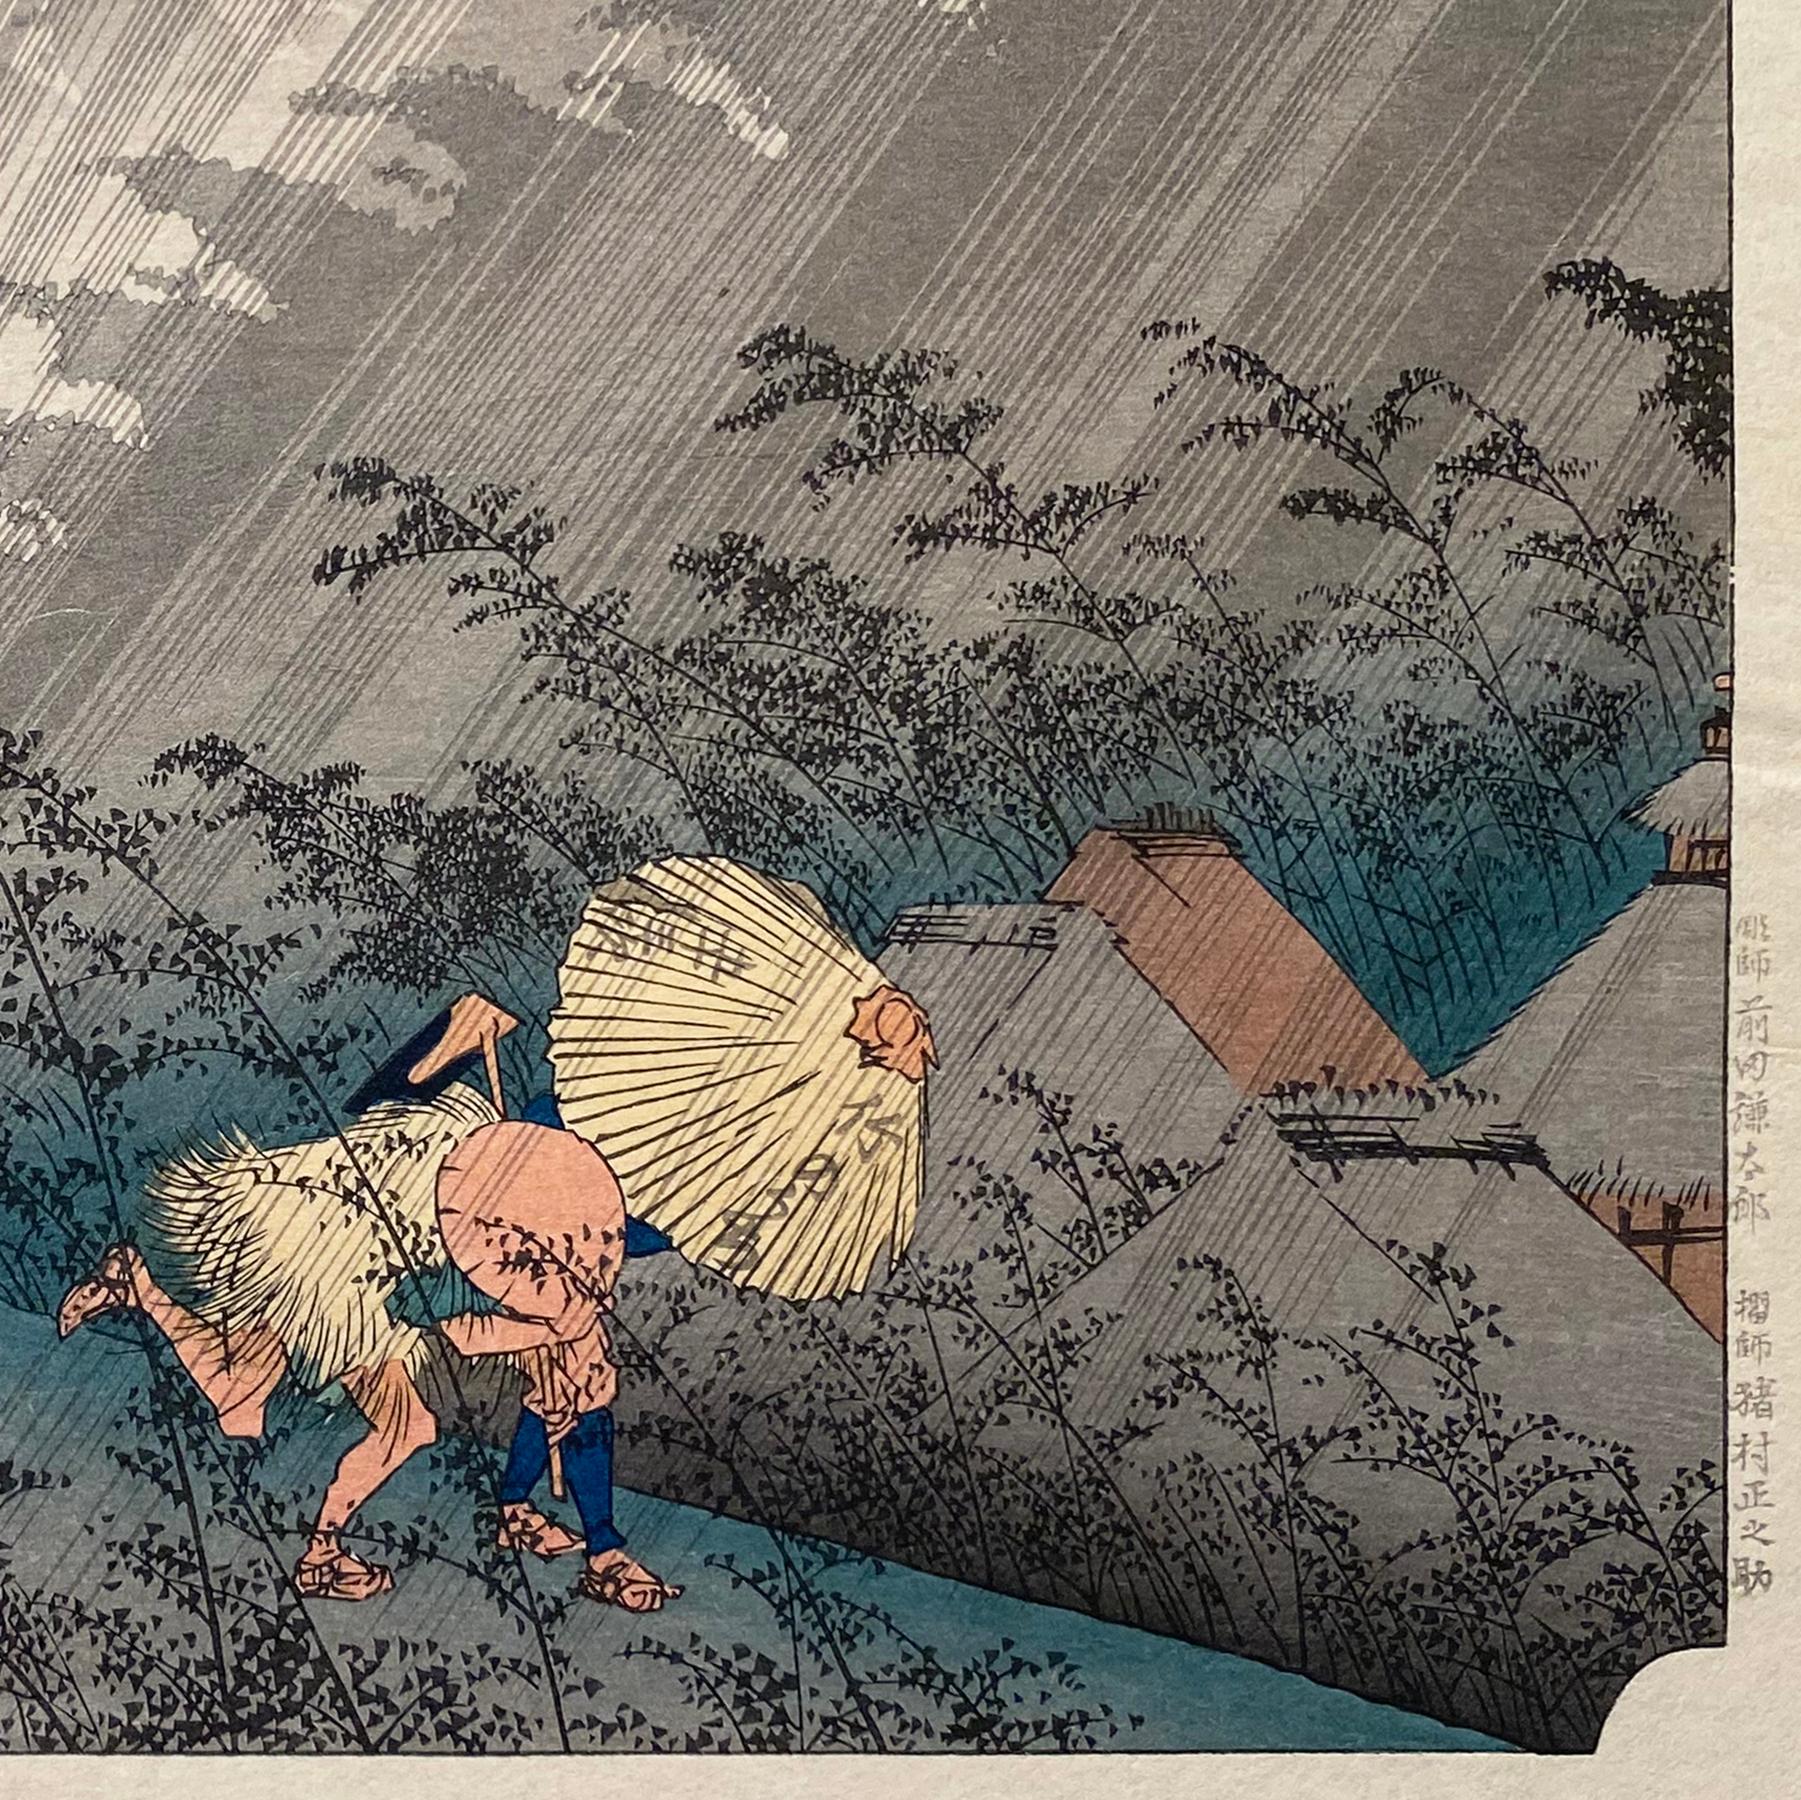 'Shono Rain', After Utagawa Hiroshige 歌川廣重, Ukiyo-e Woodblock, Tokaido For Sale 2